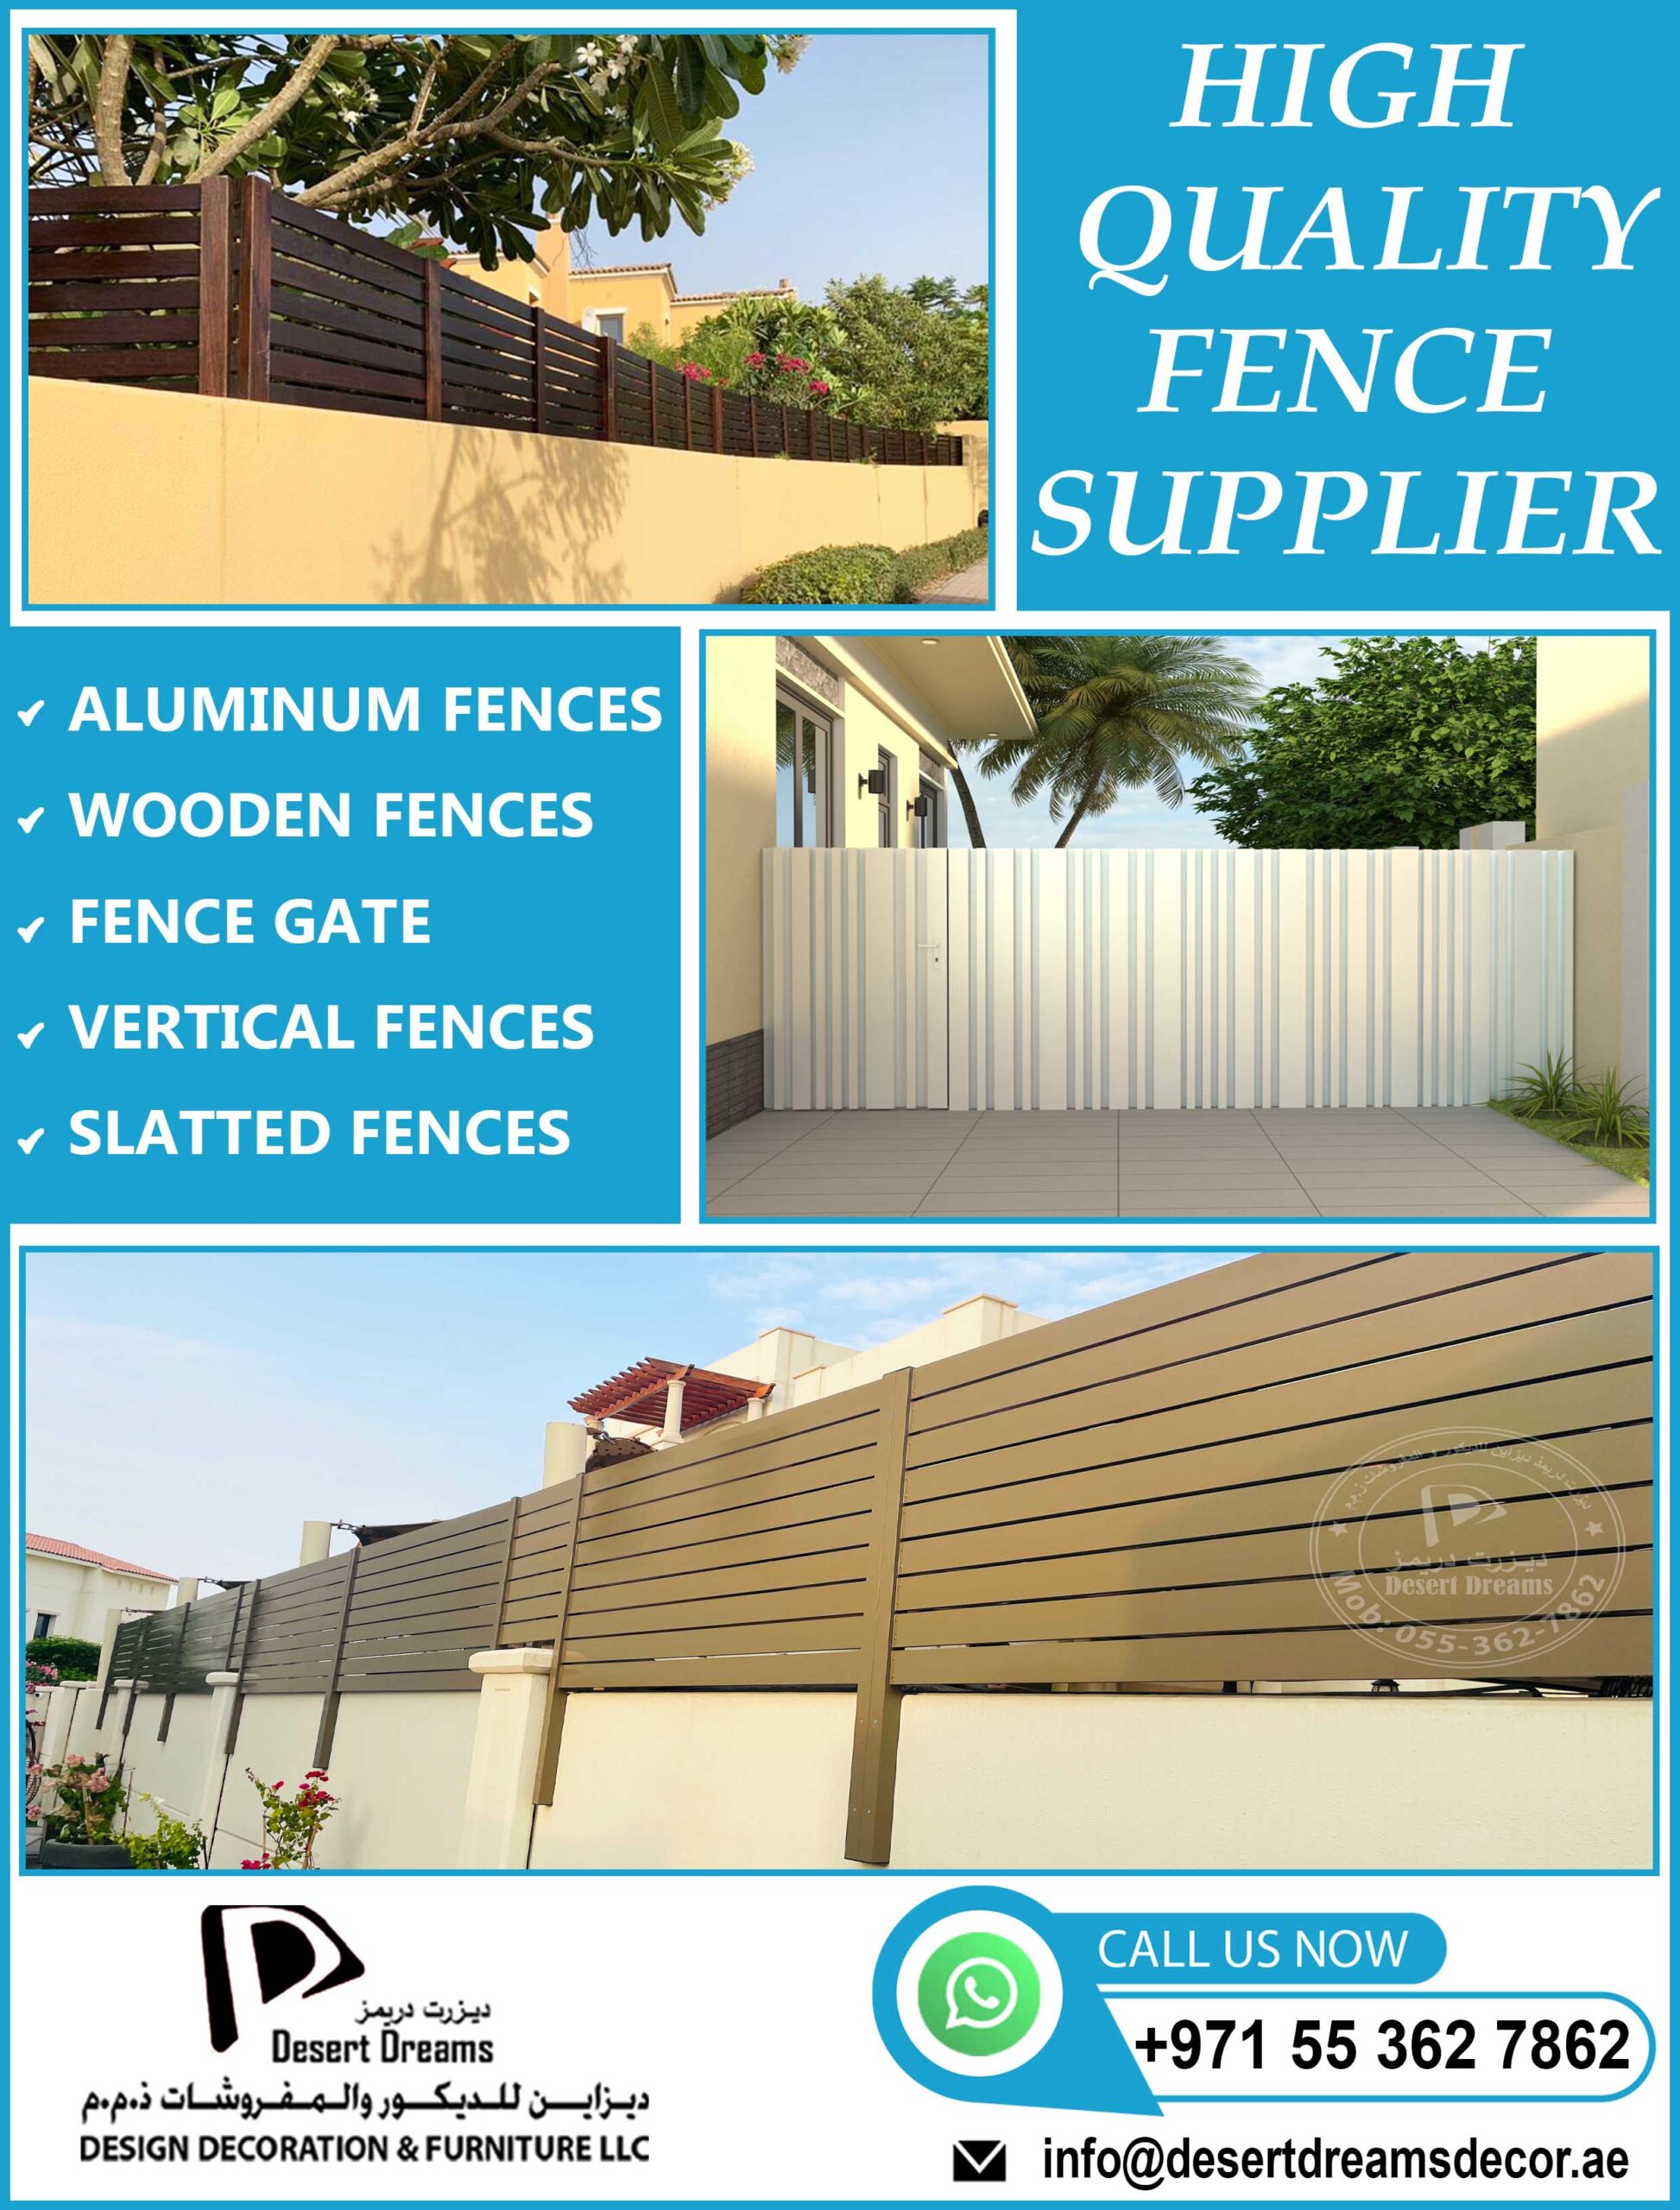 High Quality Fences Suppliers in Uae.jpg